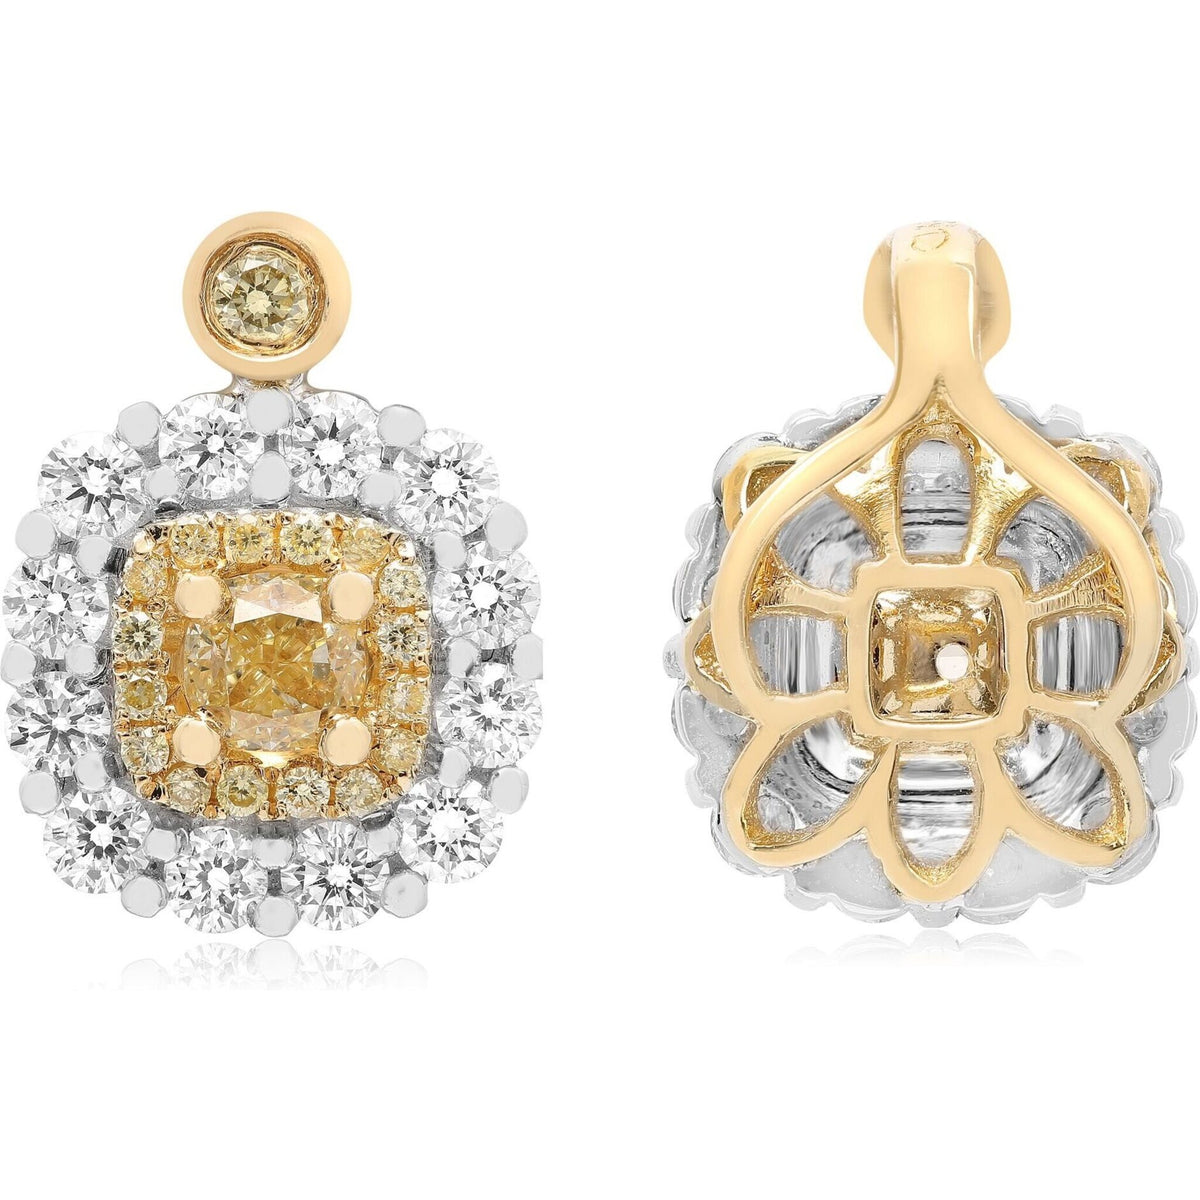 Roman & Jules - Celestial Radiance 18K White Gold Double Halo Yellow Diamond Pendant - 0.33 Carat Total Diamond Weight